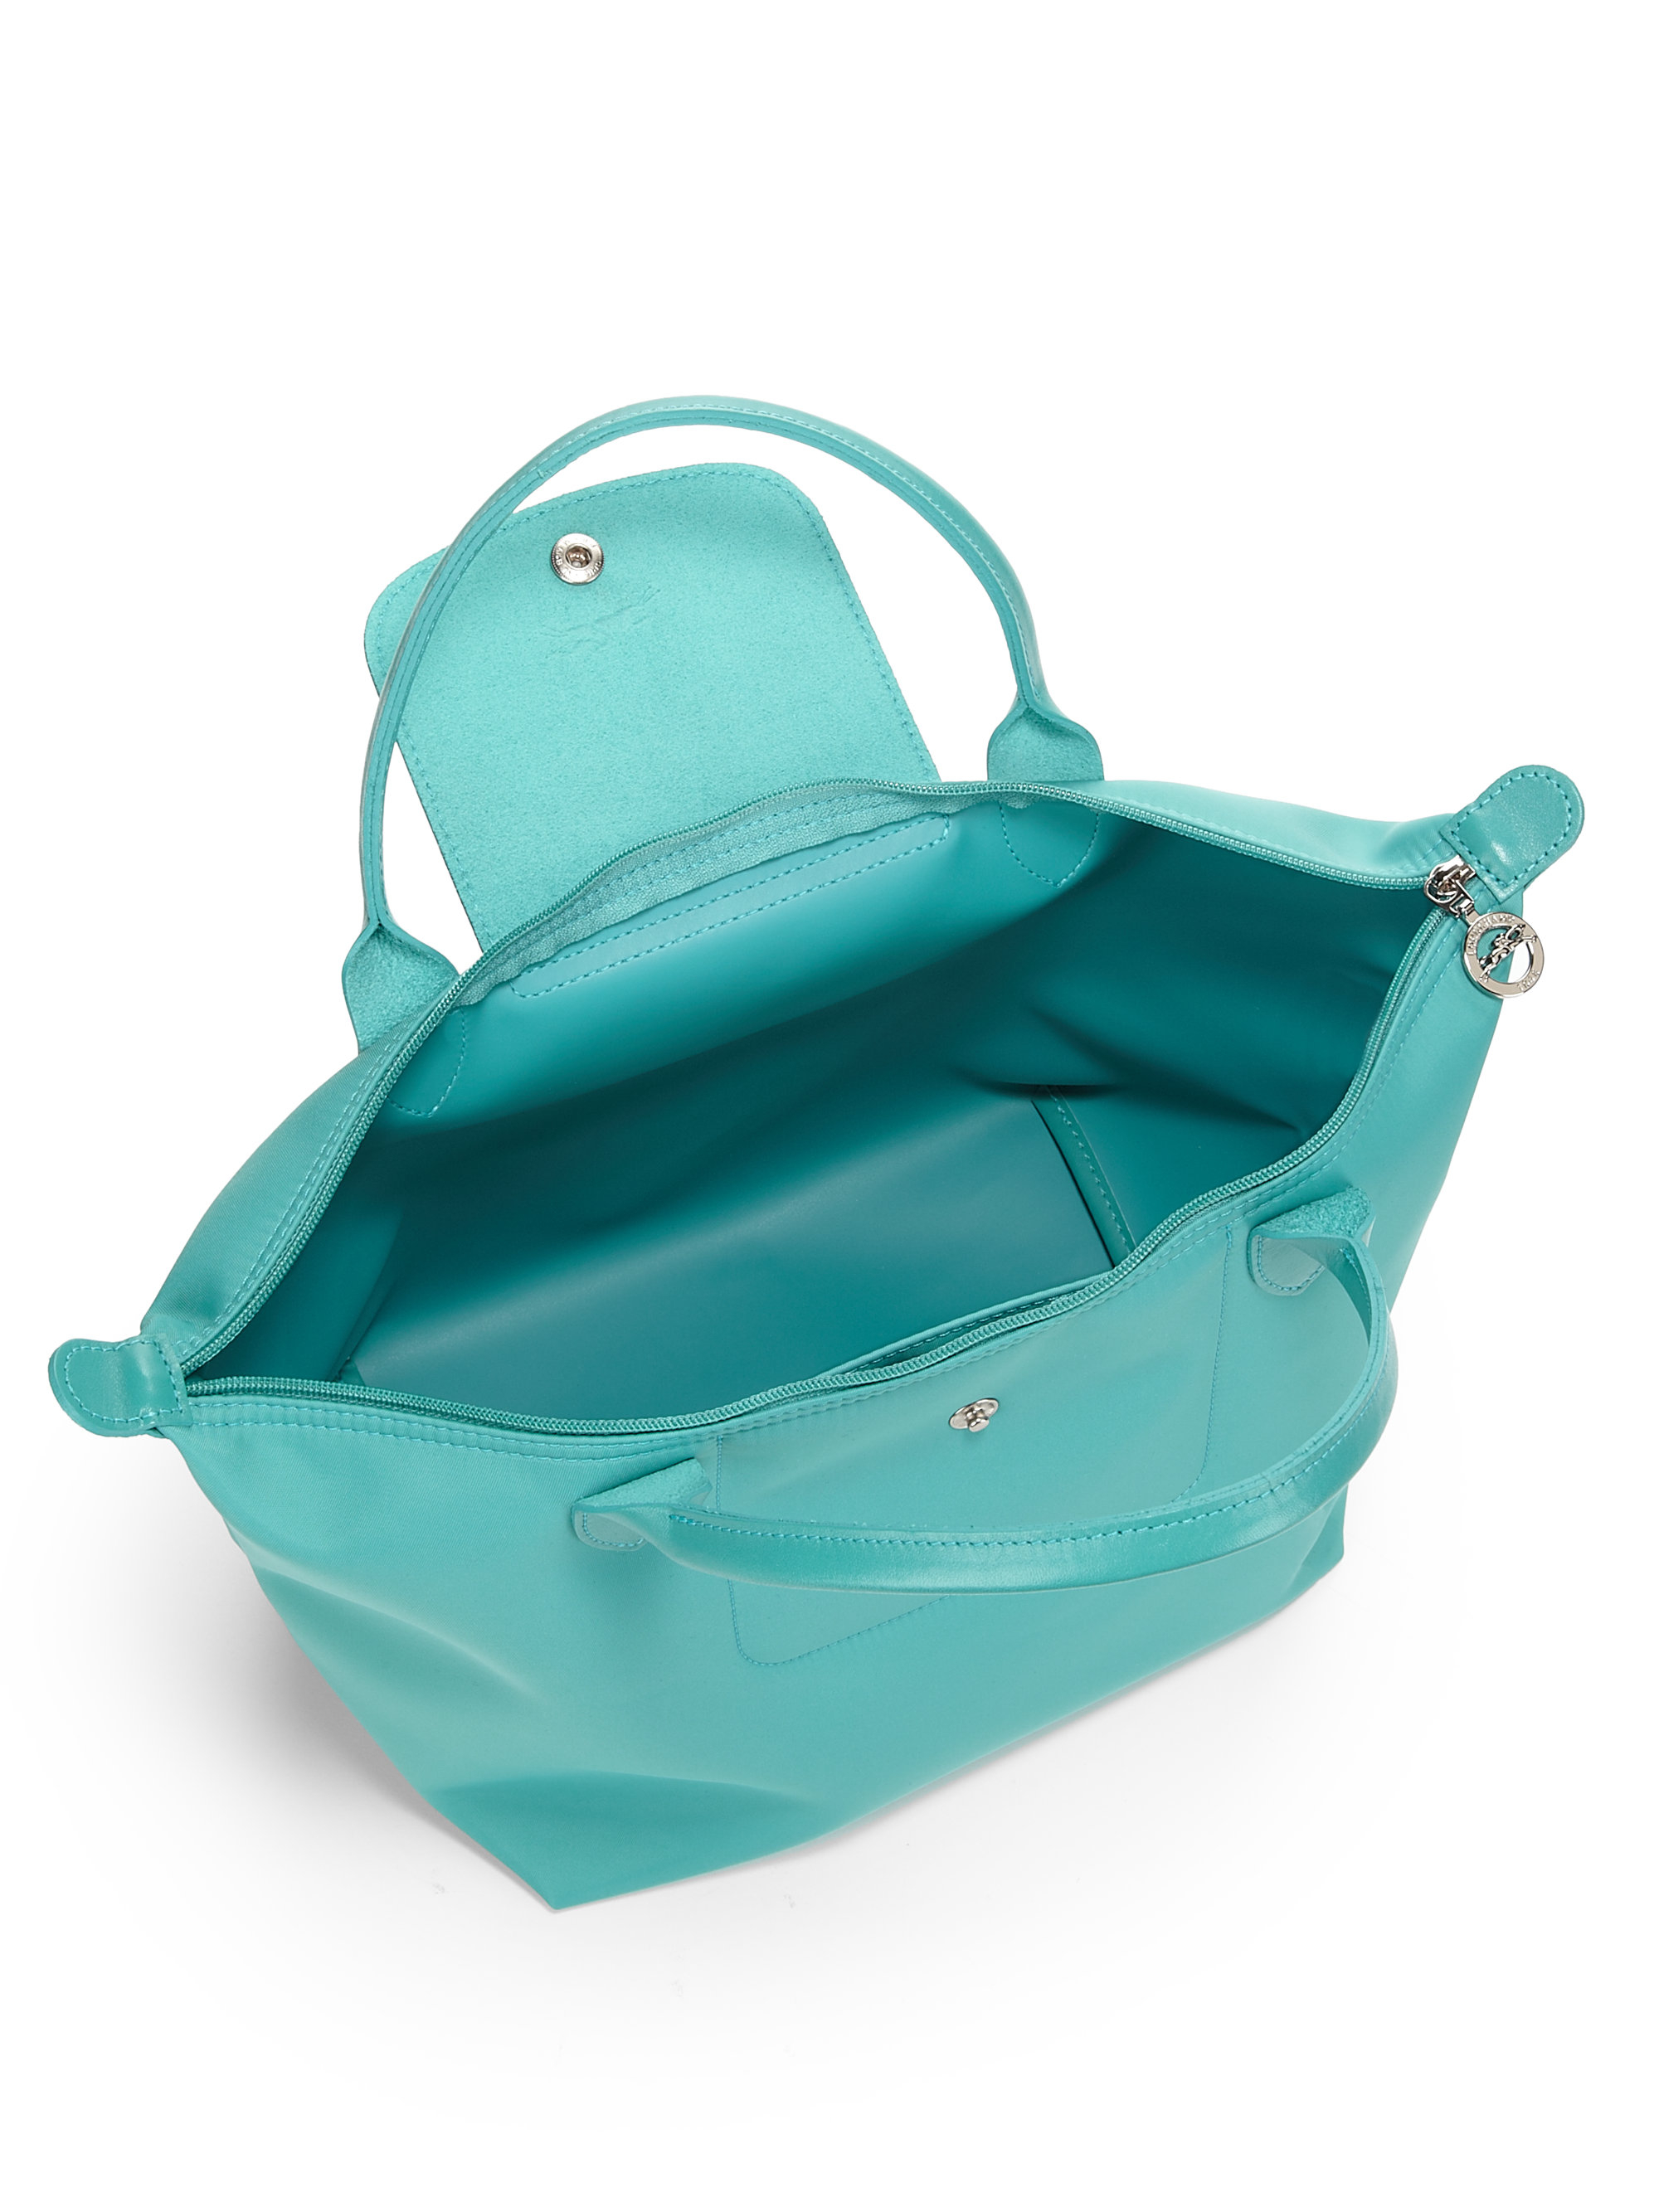 Lyst - Longchamp Planetes Nylon Top Handle Bag in Green